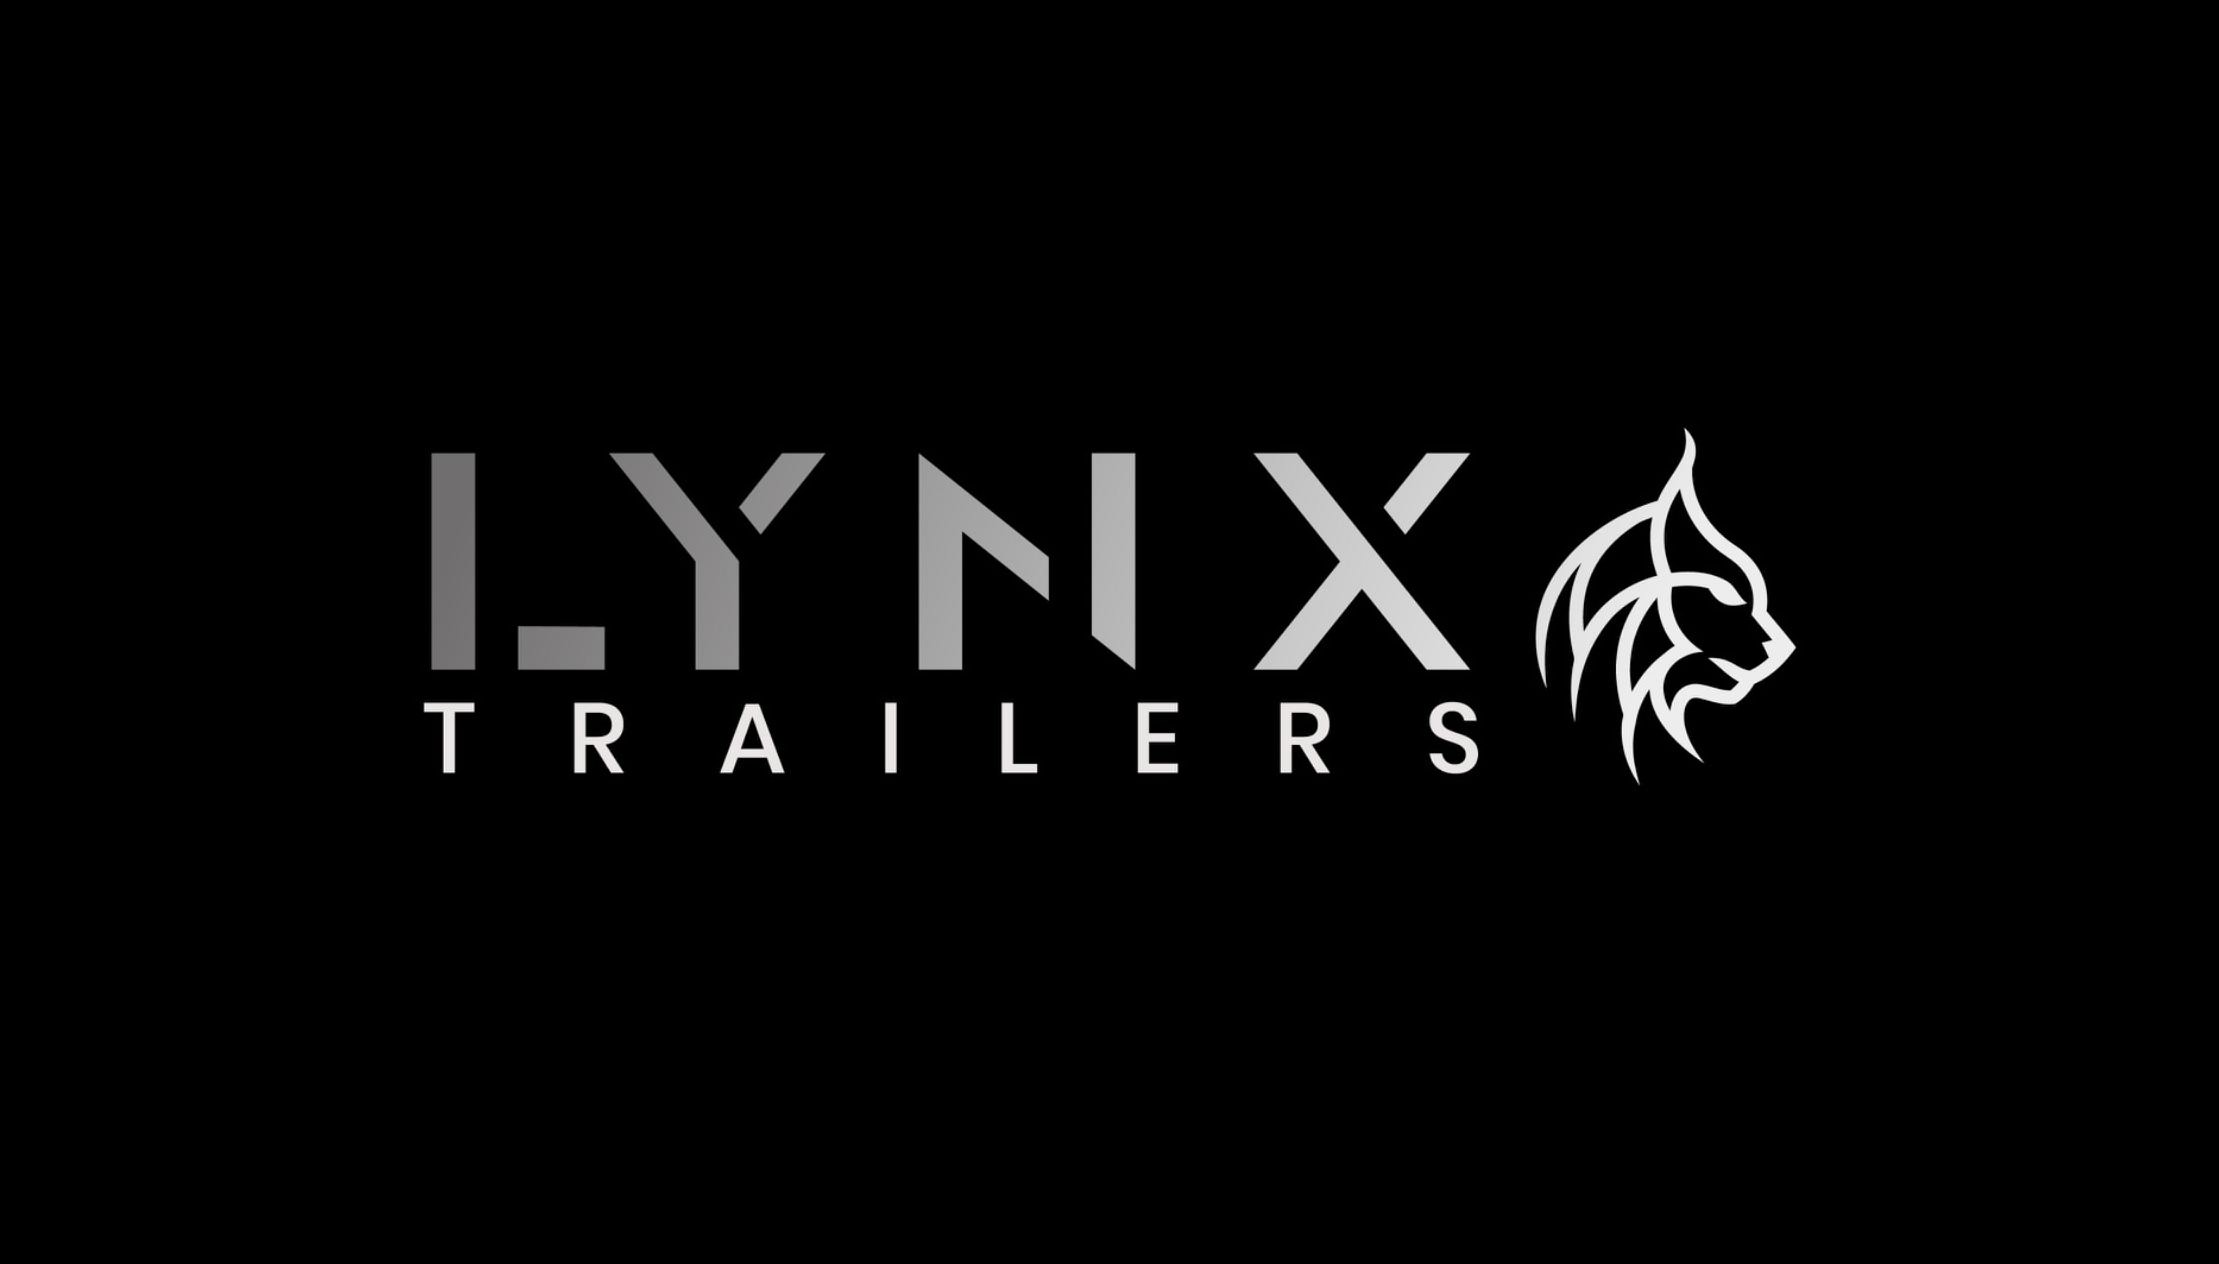 Trademark Logo LYNX TRAILERS